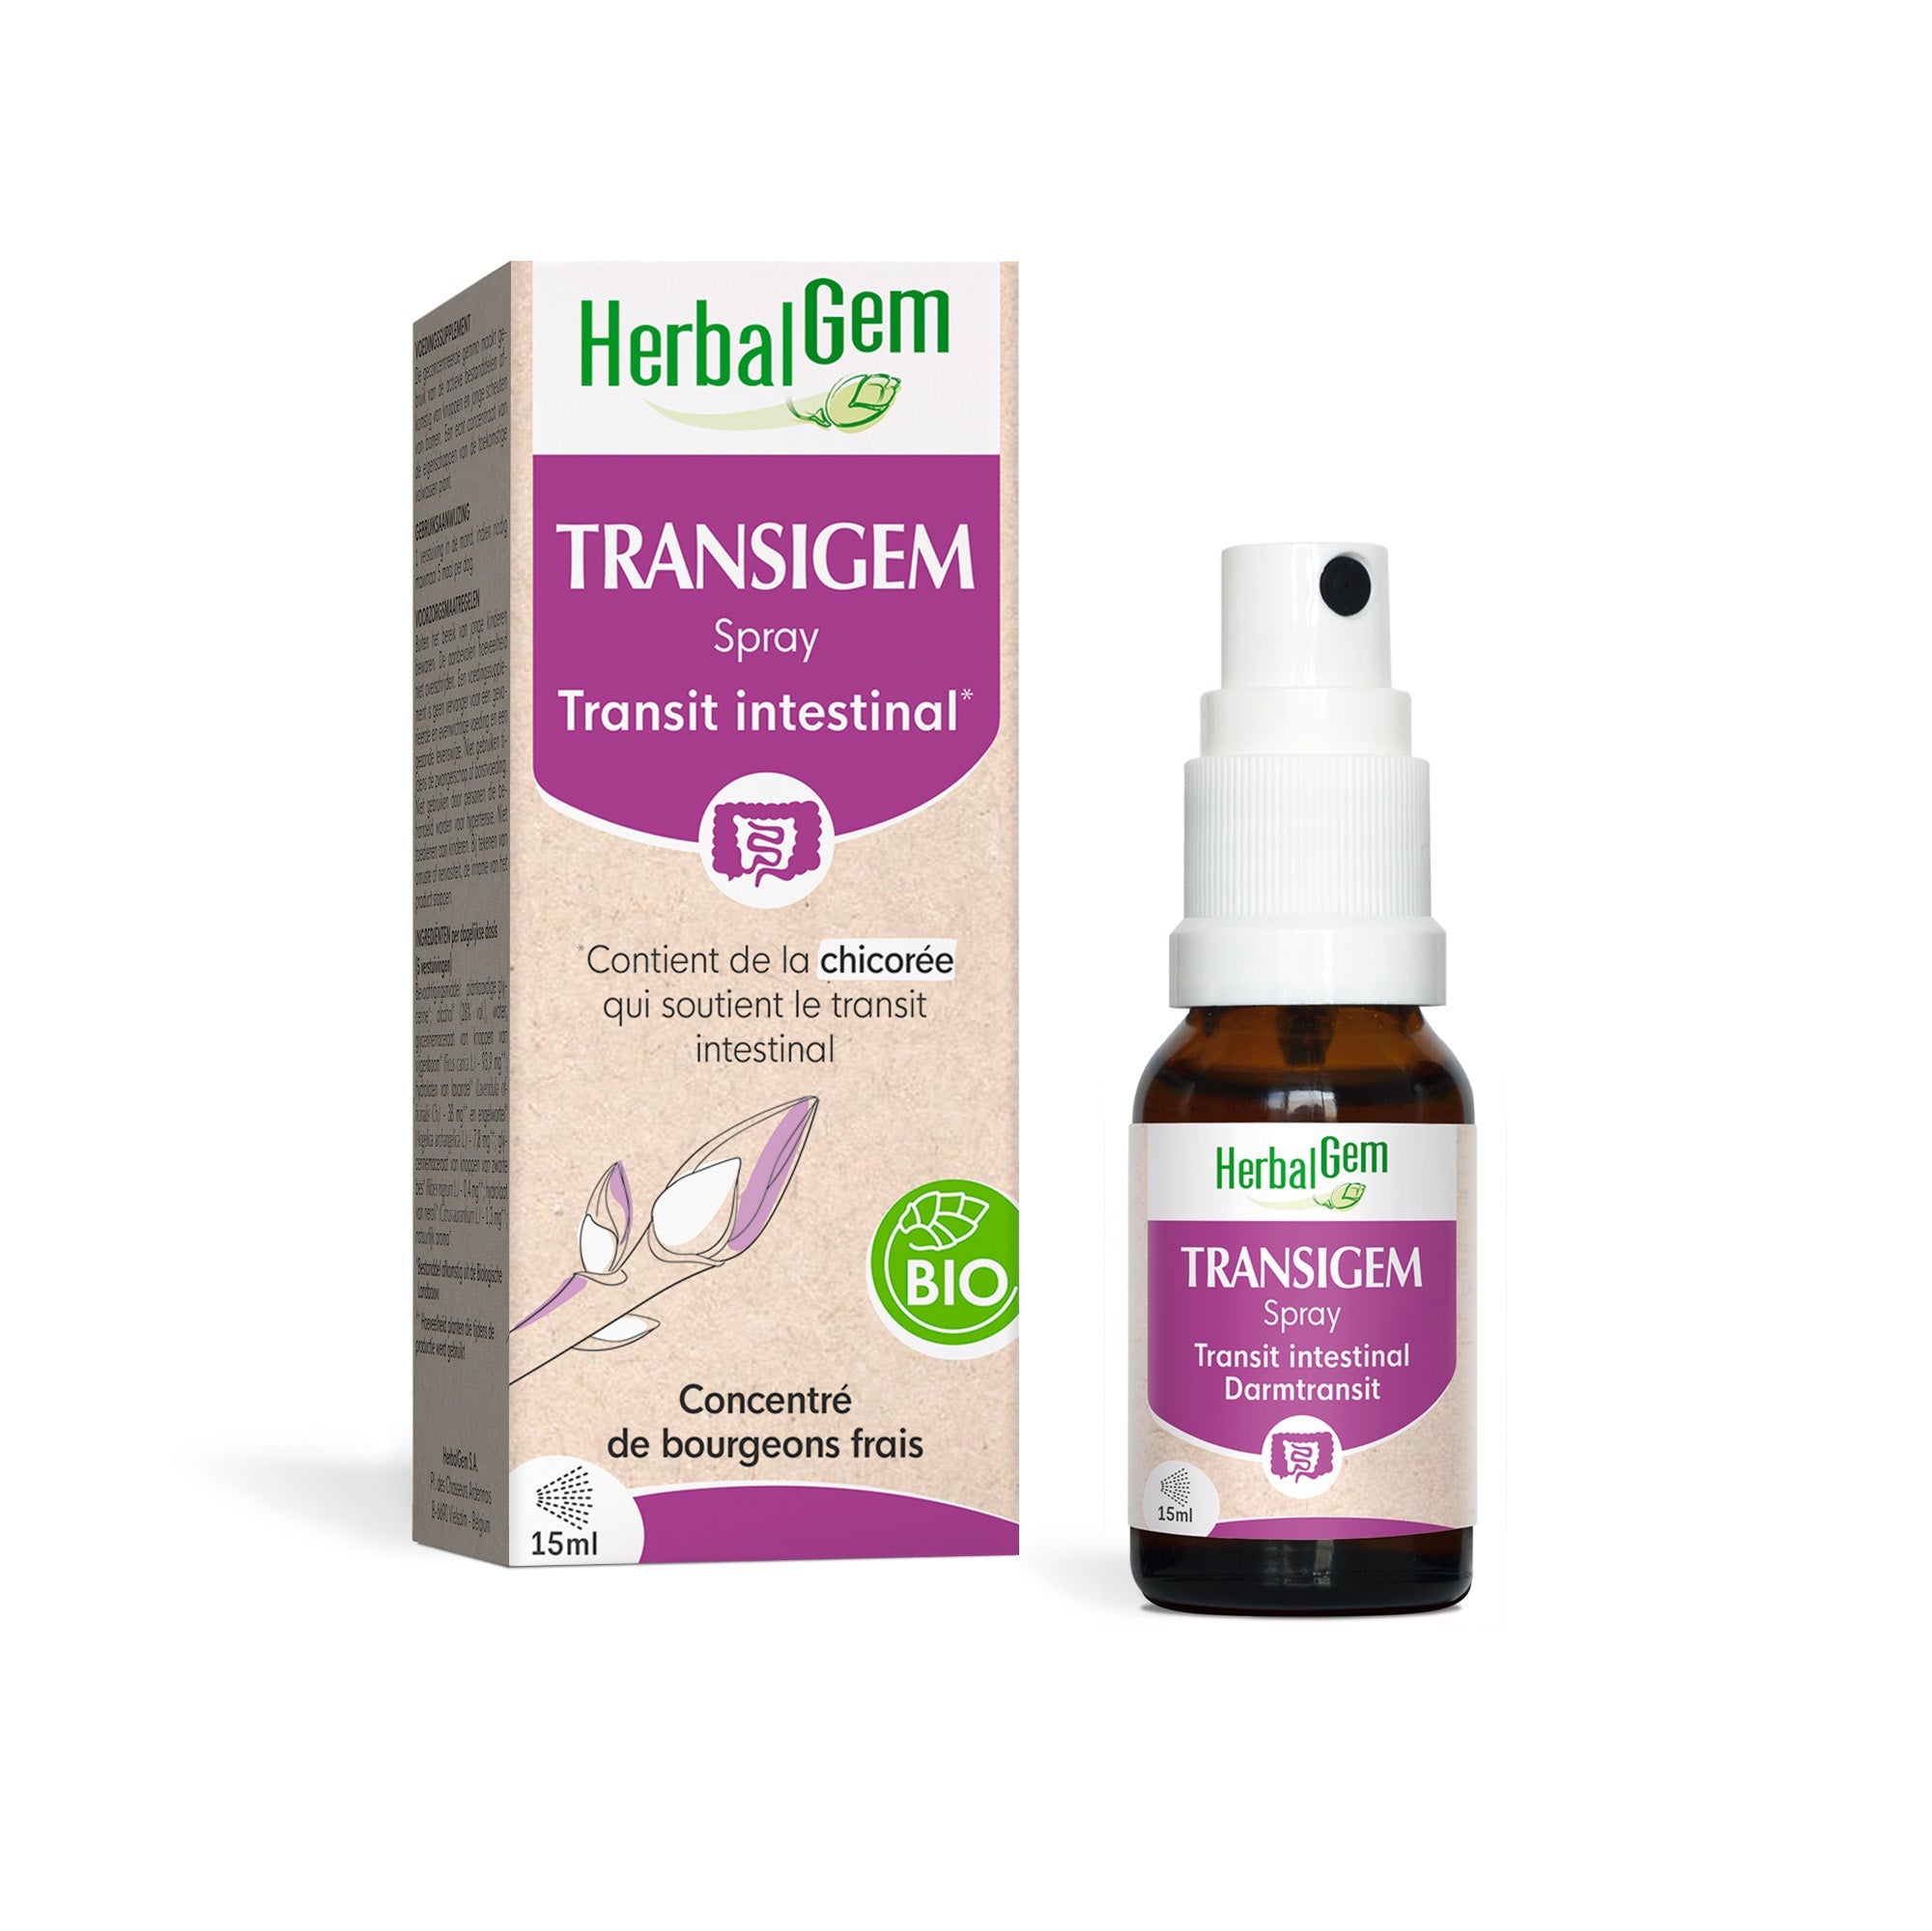 TransiGem spray - transit intestinal - Bio